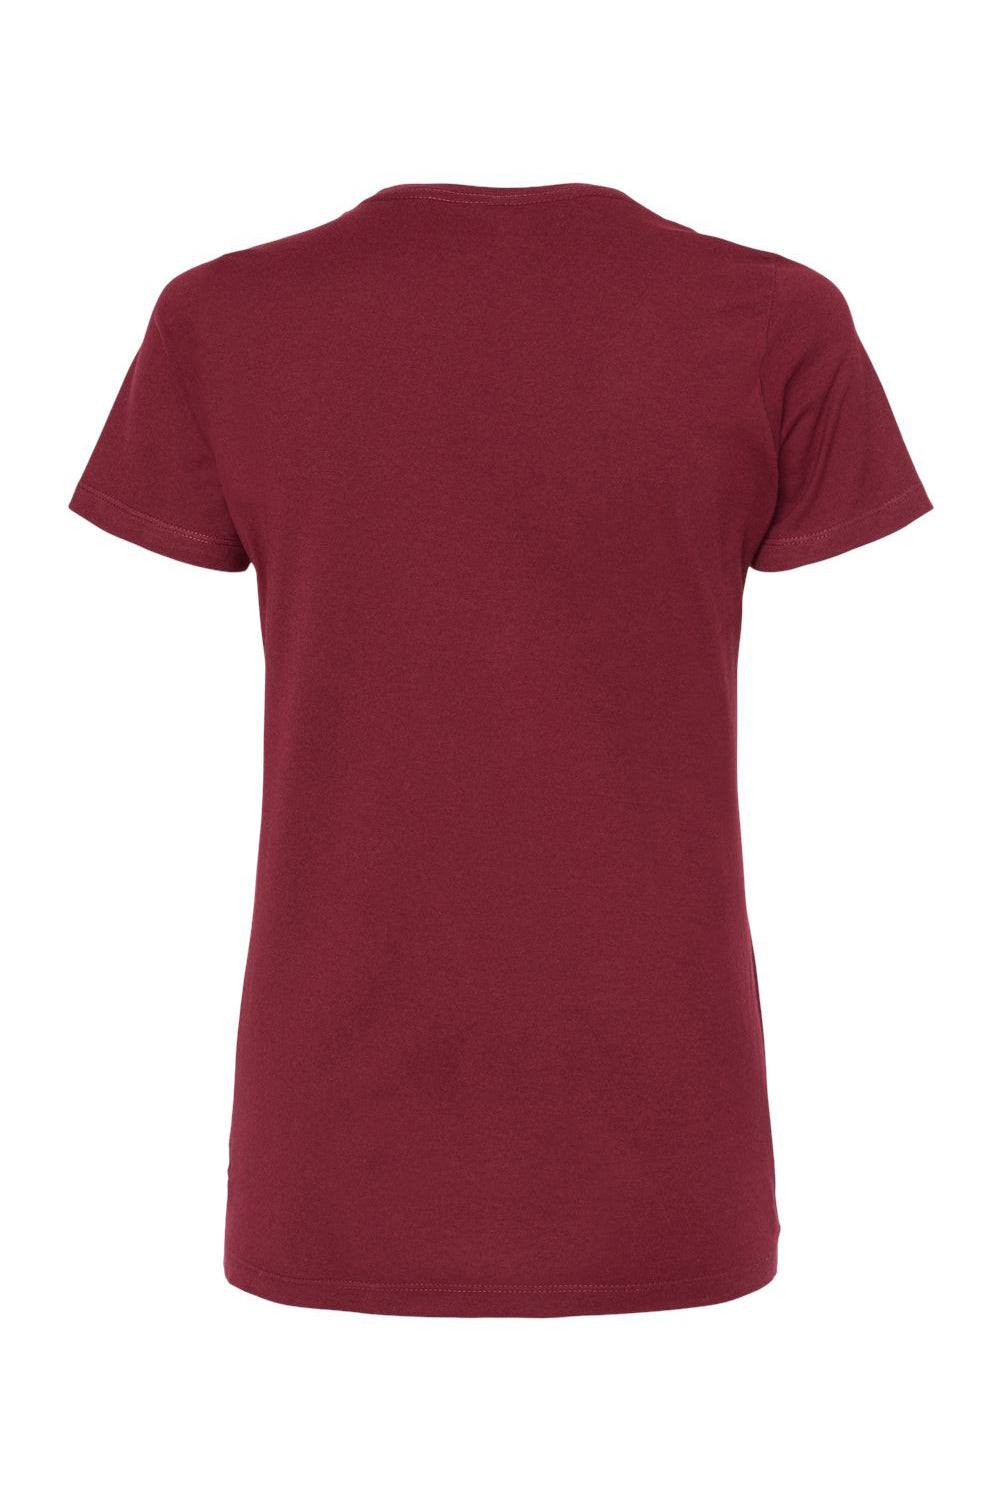 Tultex 516 Womens Premium Short Sleeve Crewneck T-Shirt Burgundy Flat Back